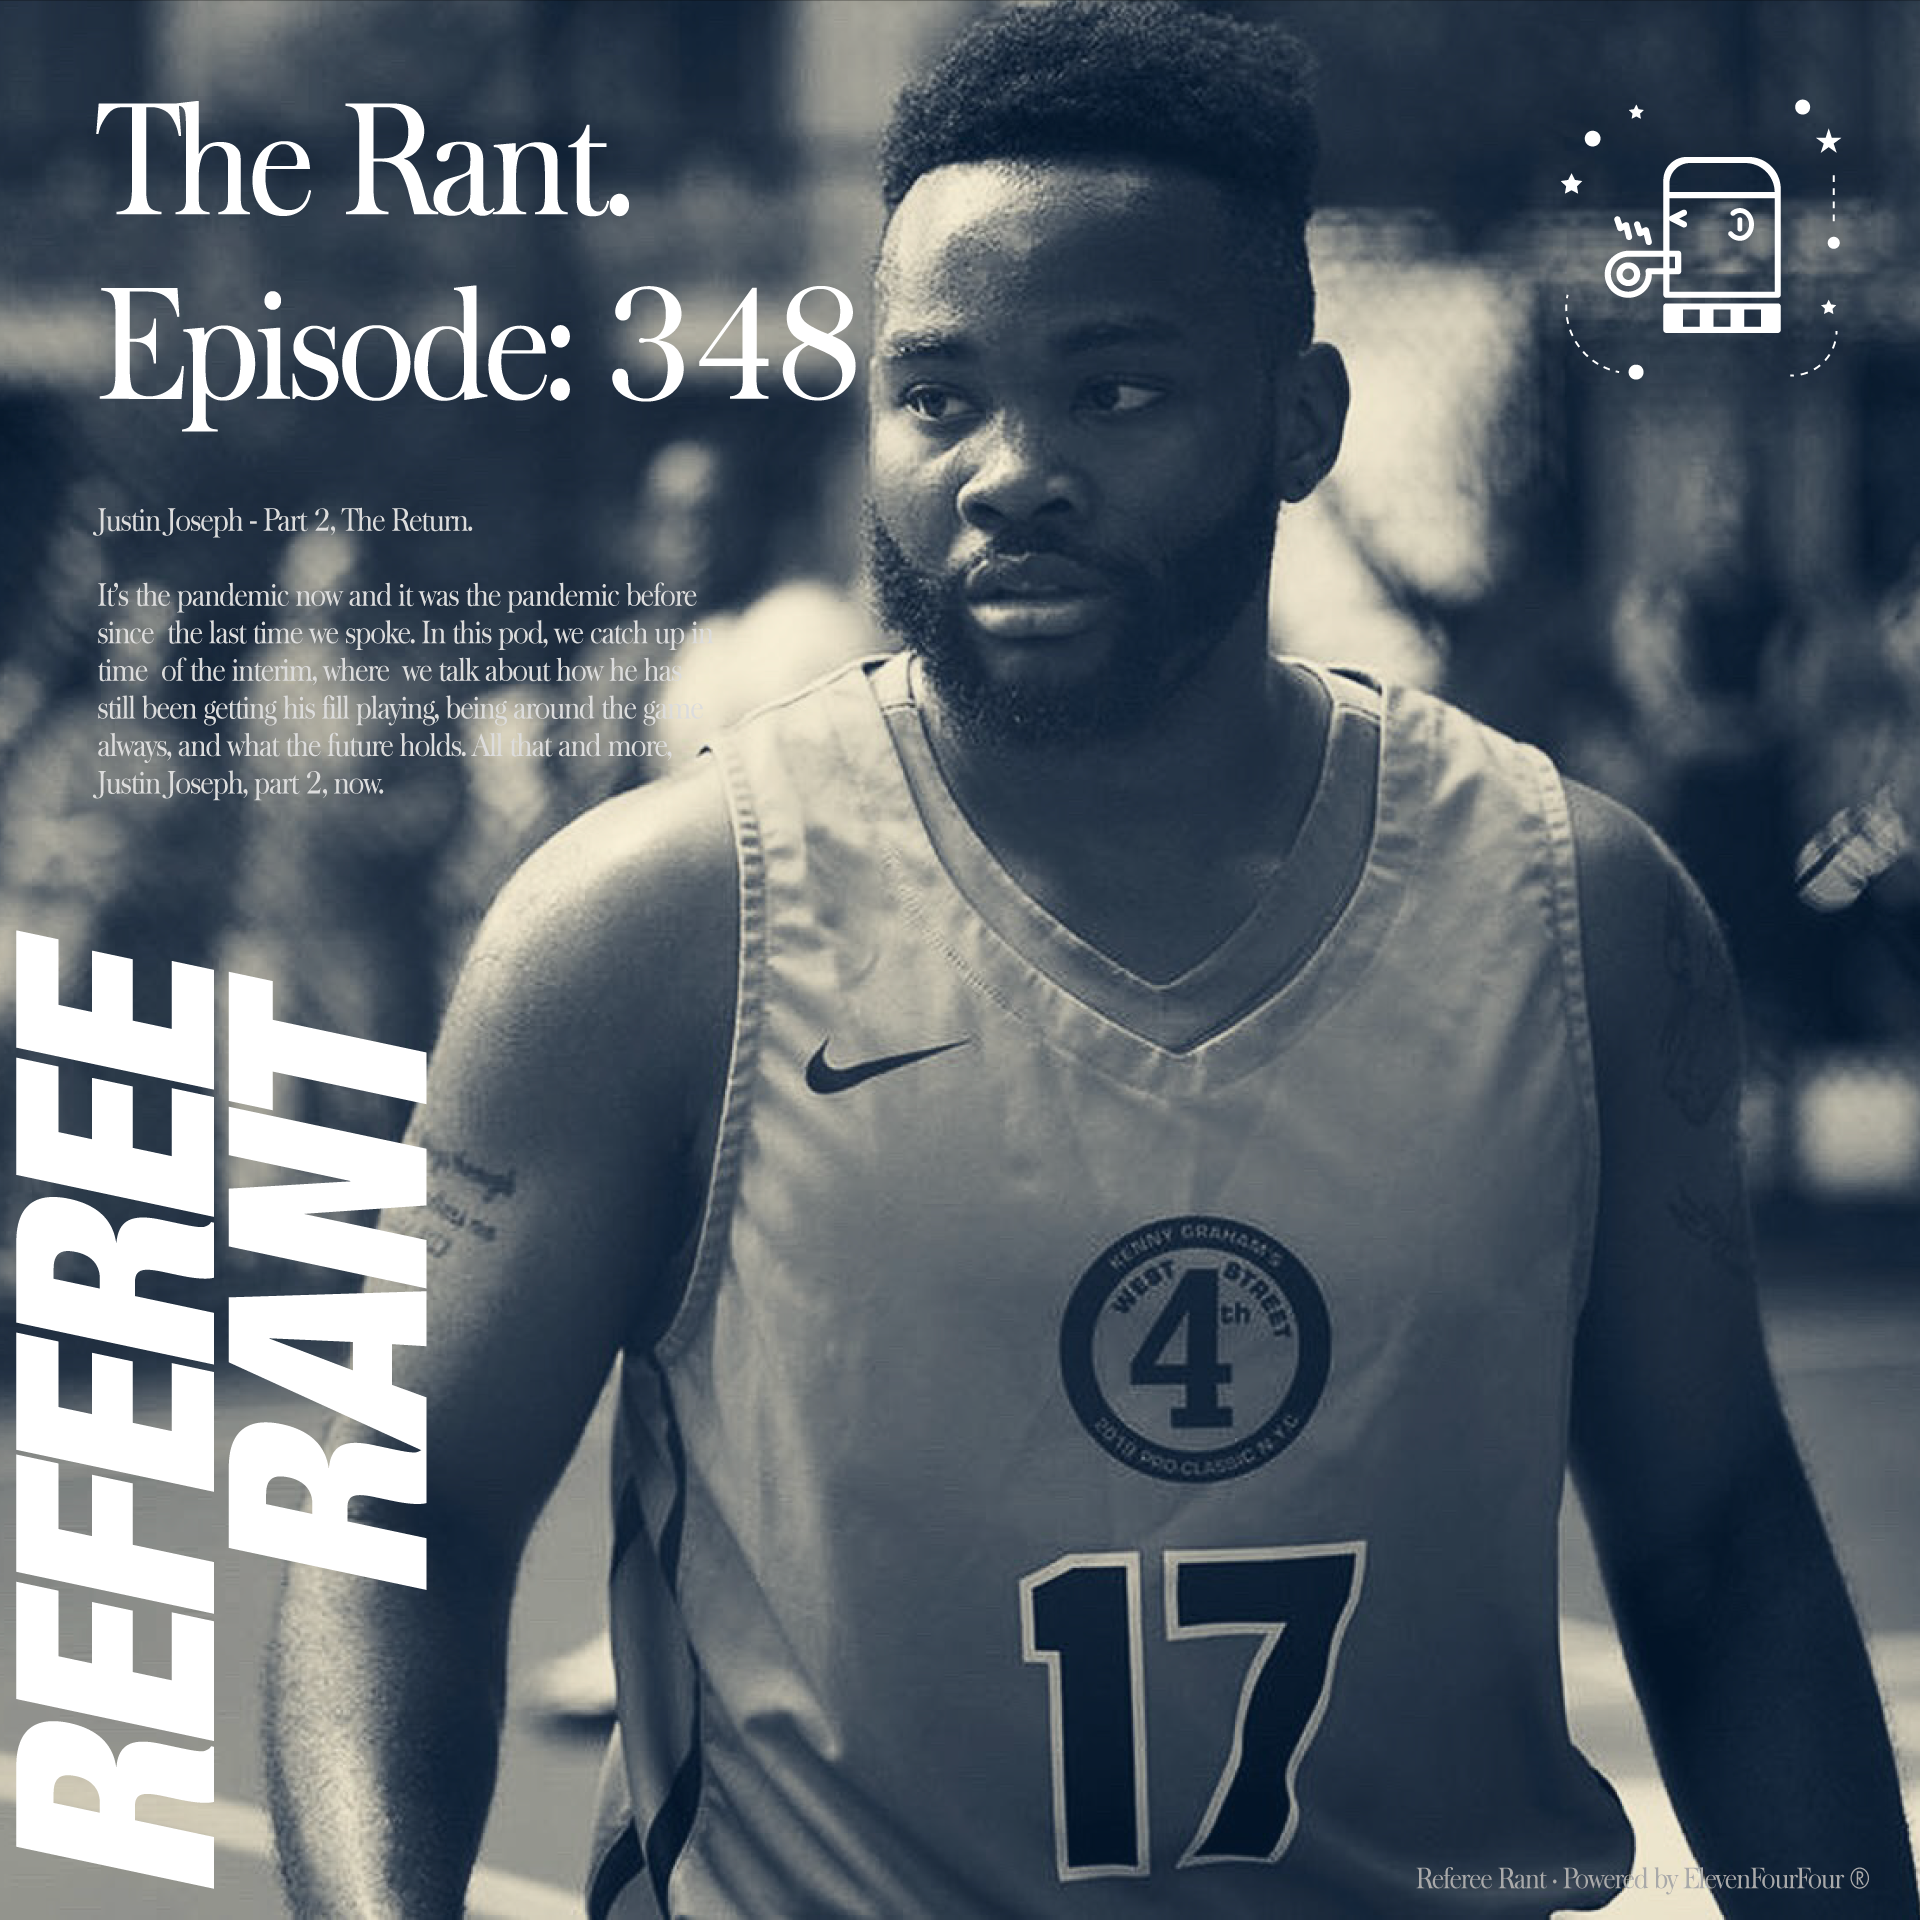 Episode 348, The Rant: Justin Joseph - Part 2, The Return. 